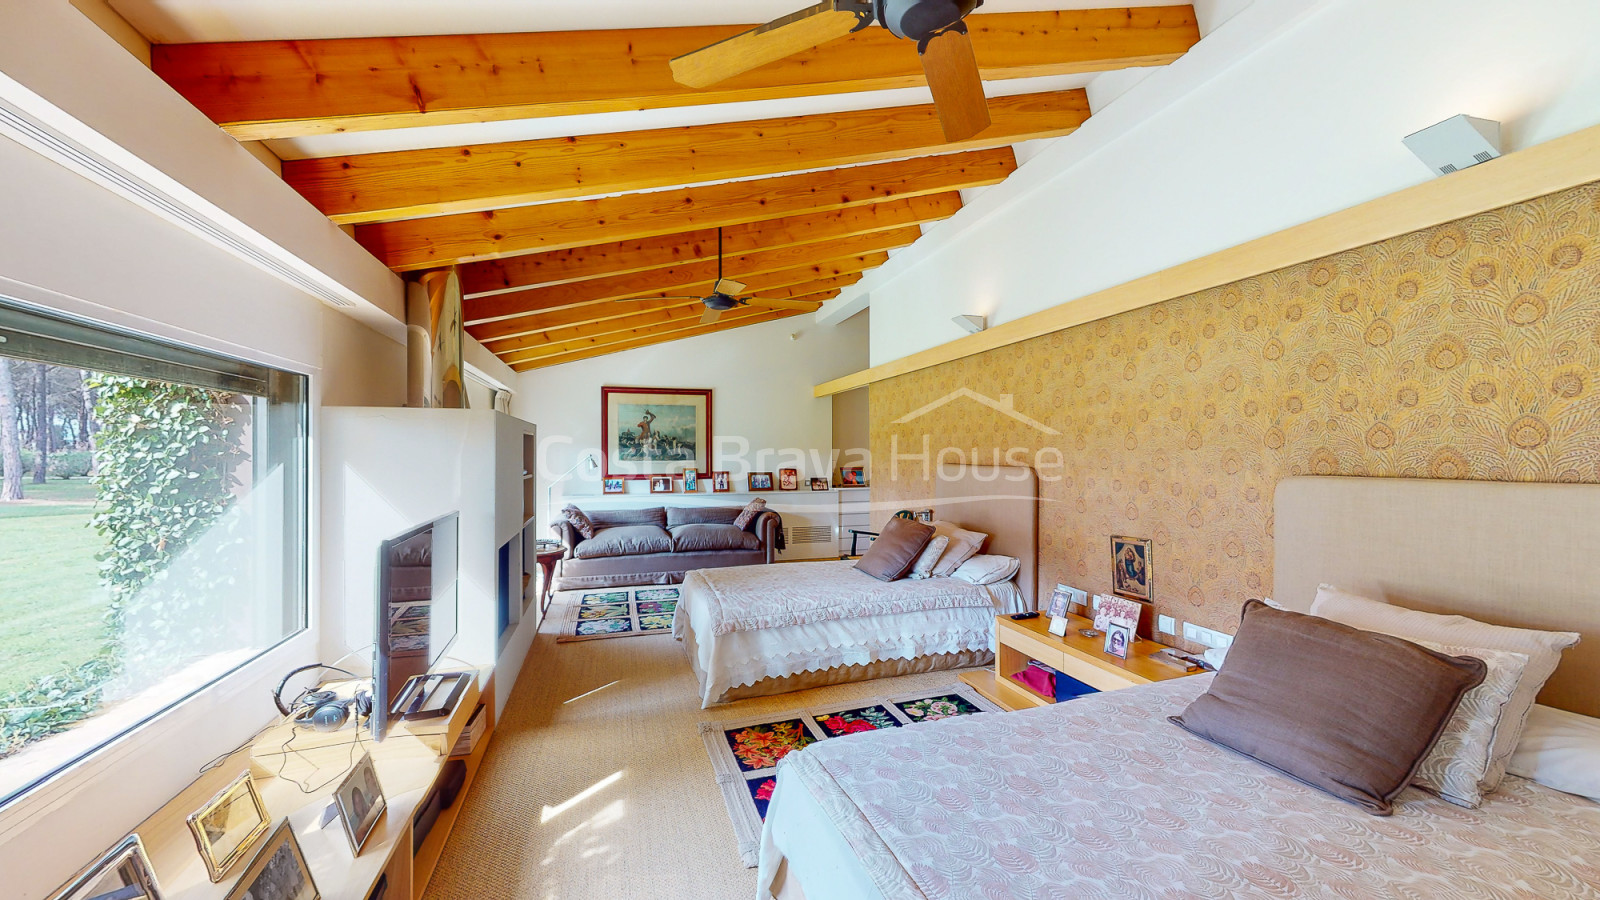 Luxury estate for sale in Baix Empordà. Maximum privacy and comfort.